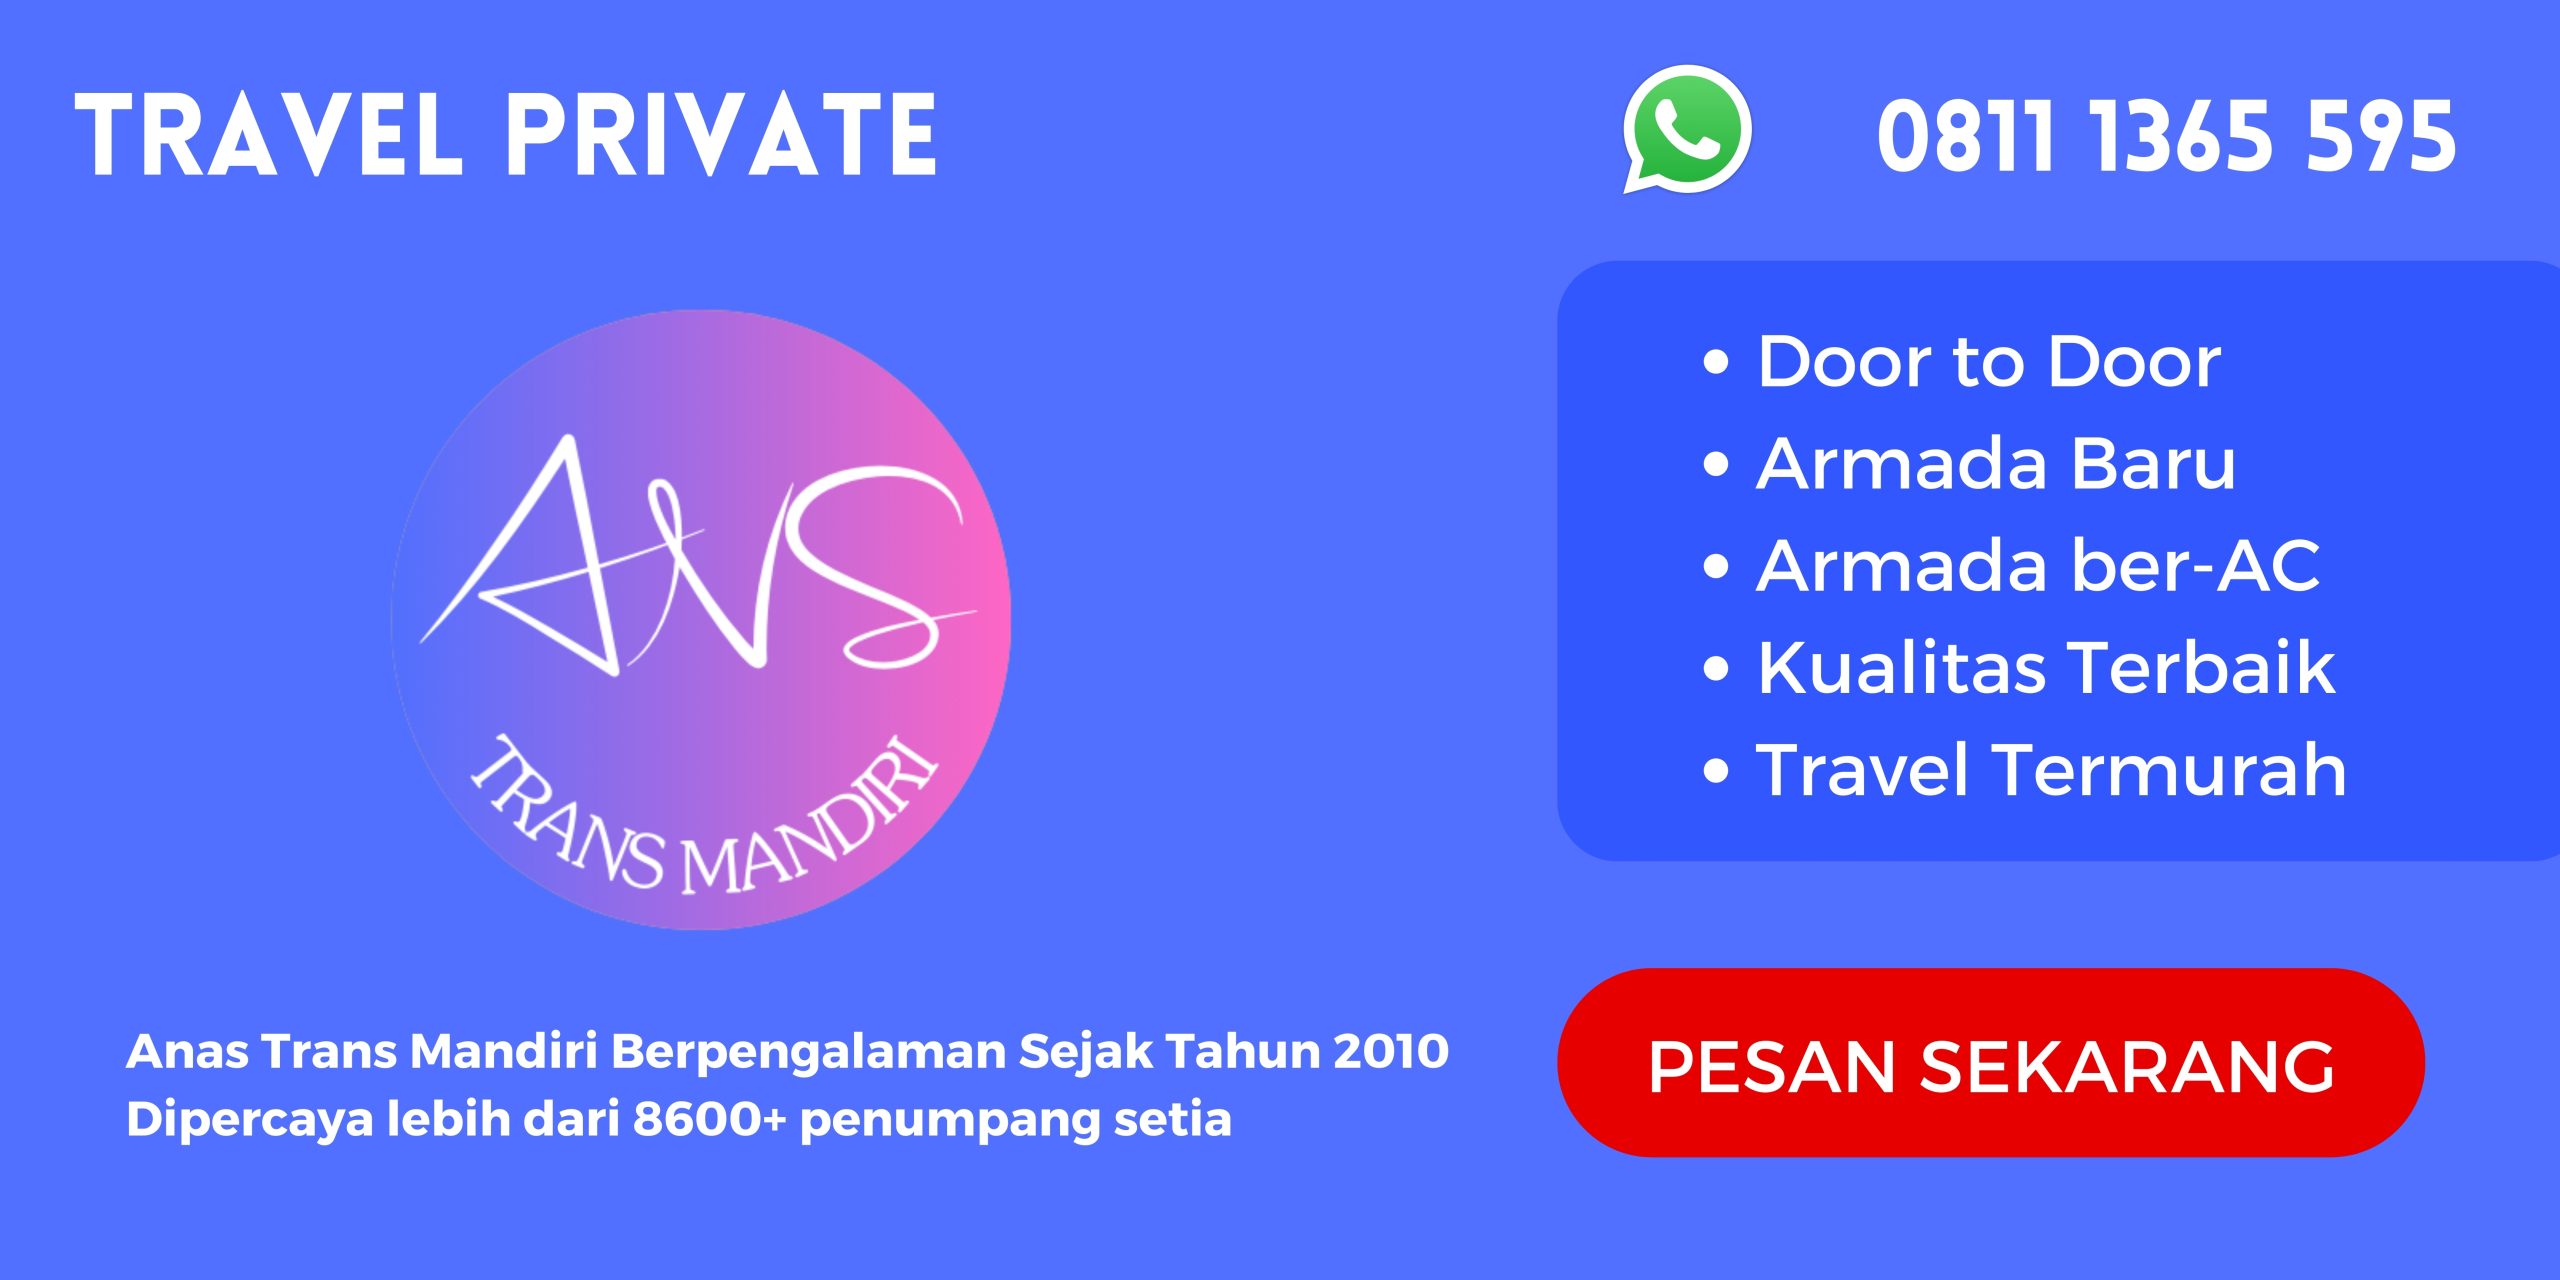 Travel Private - Banner Anas Trans Mandiri